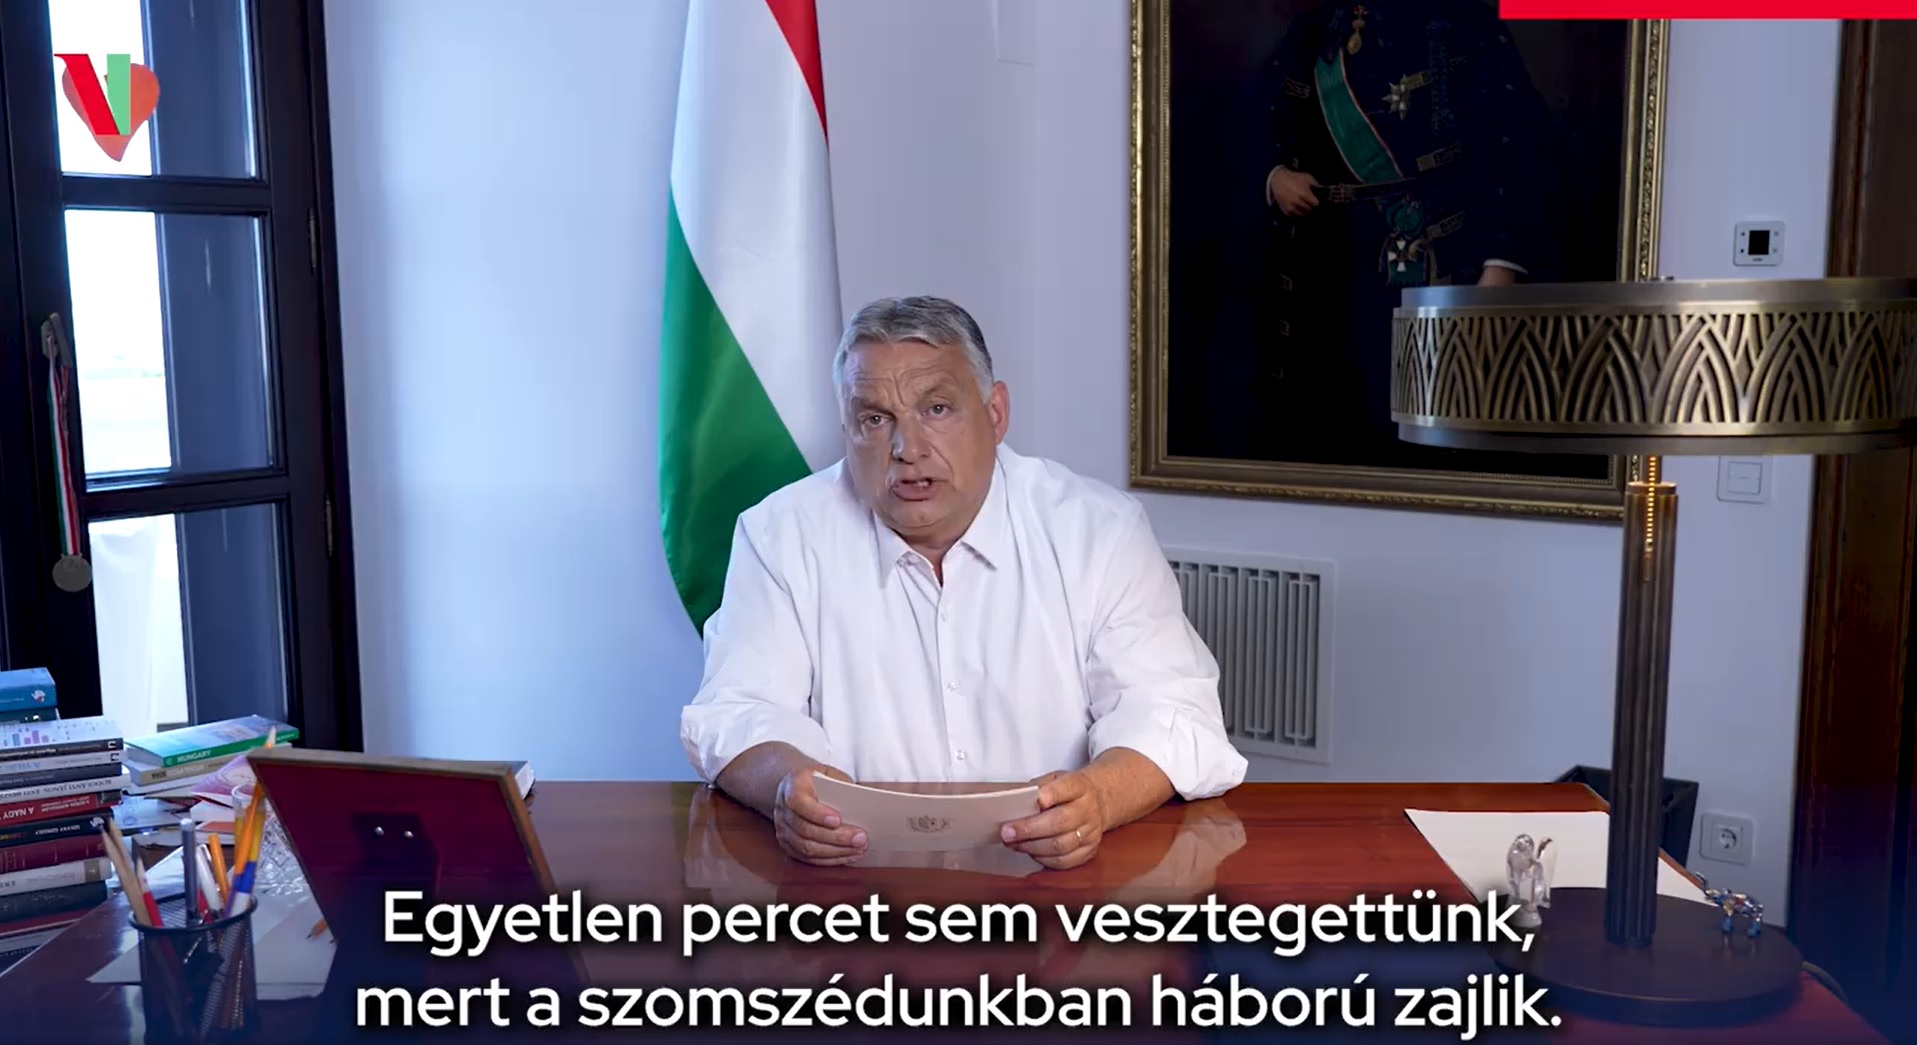 Mit olvas Orbán Viktor?